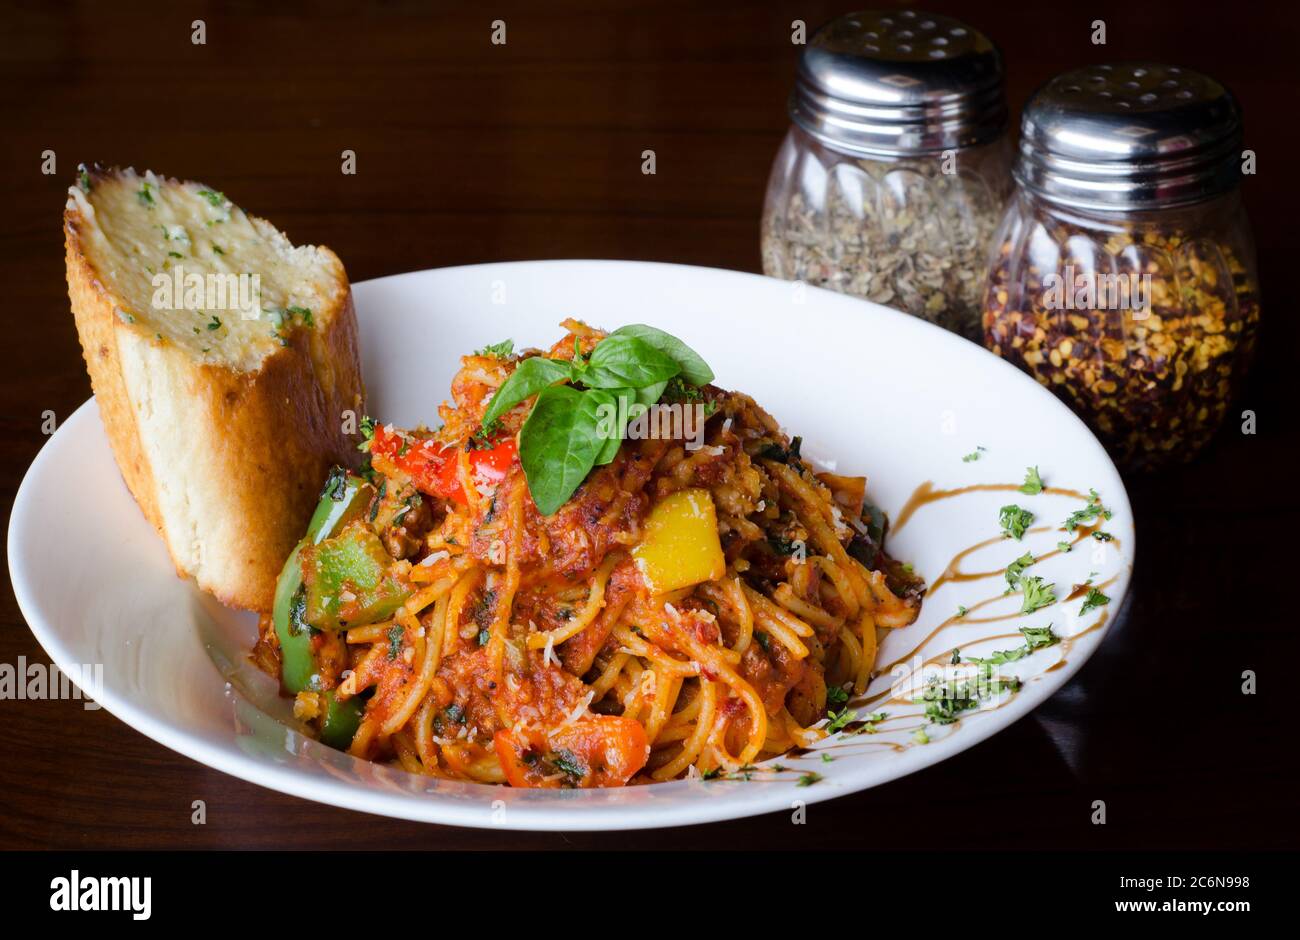 Tasty spaghetti with great presentation Stock Photo